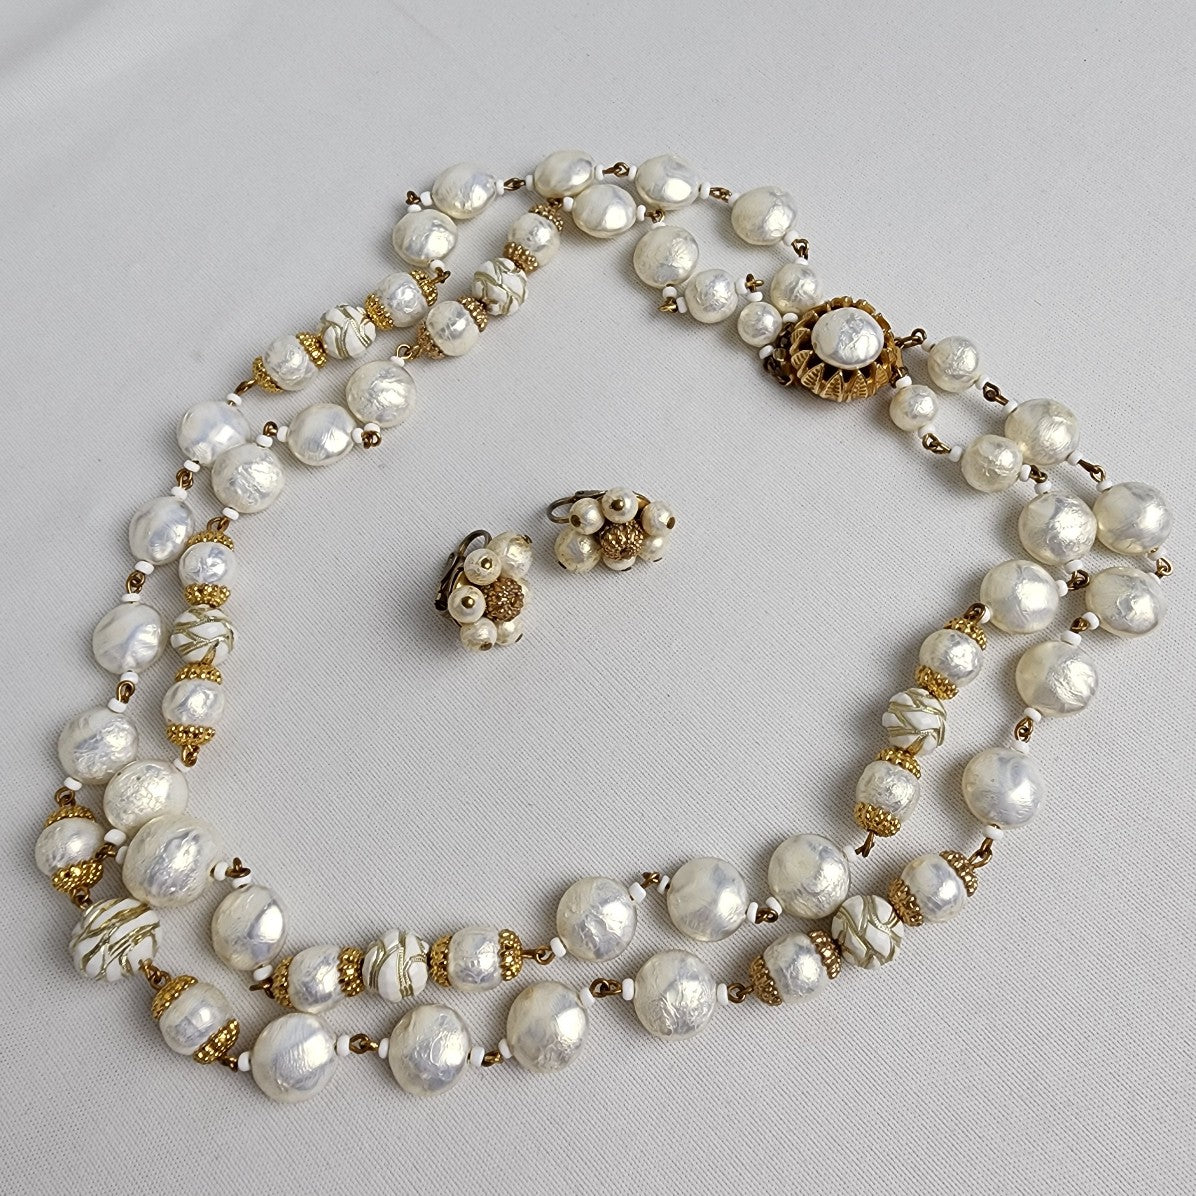 Vintage Metallic White Layered Beaded Necklace Earrings Set